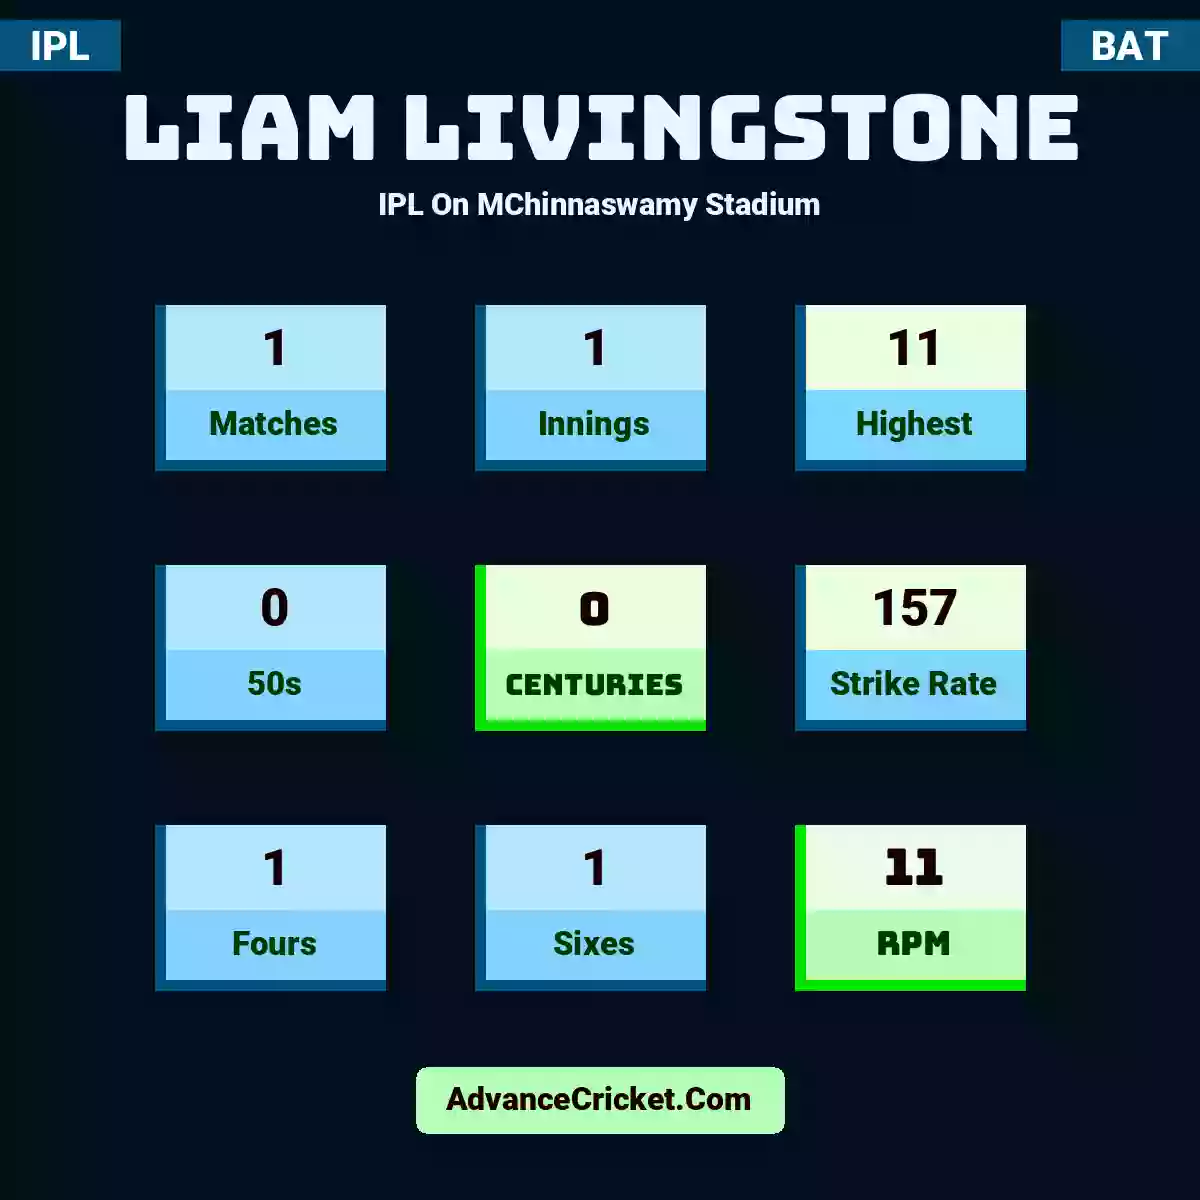 Liam Livingstone IPL  On MChinnaswamy Stadium, Liam Livingstone played 1 matches, scored 11 runs as highest, 0 half-centuries, and 0 centuries, with a strike rate of 157. L.Livingstone hit 1 fours and 1 sixes, with an RPM of 11.